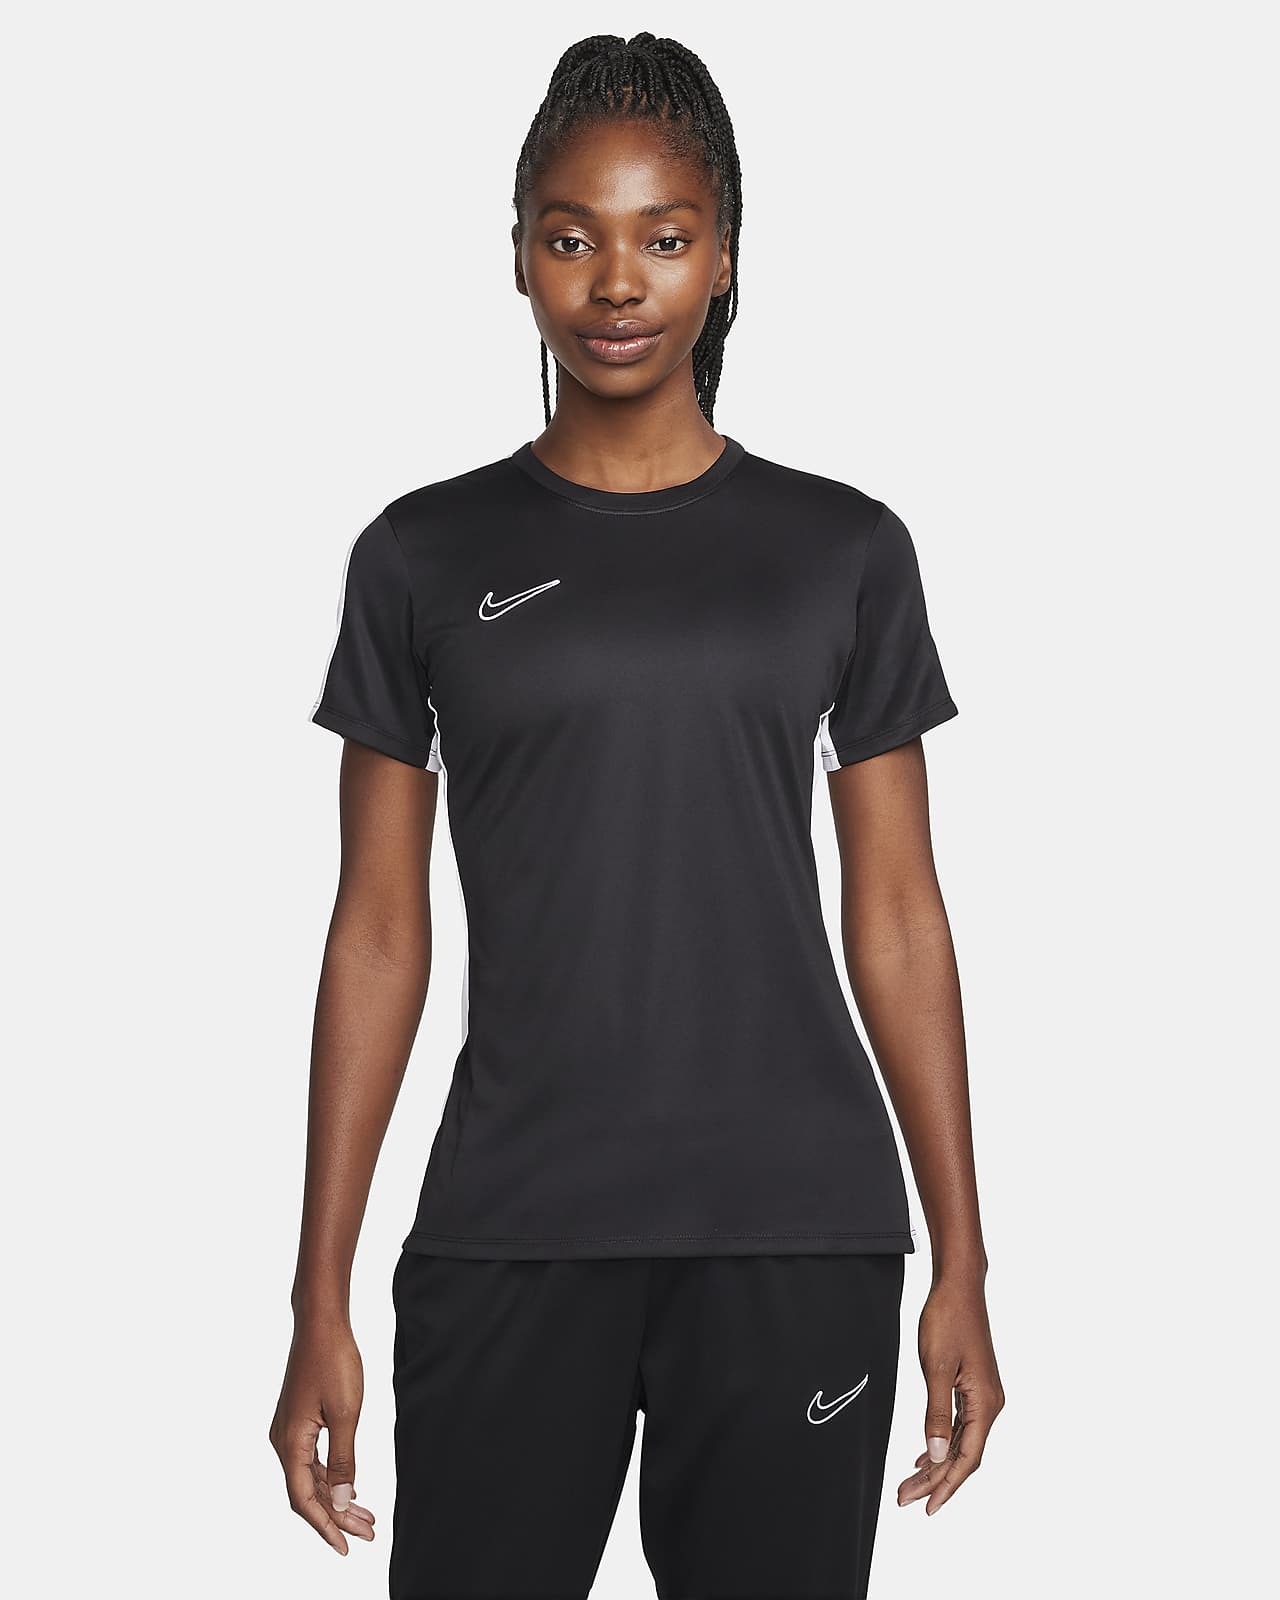 Nike Women's Dri-FIT Short Sleeve Yoga Training Top